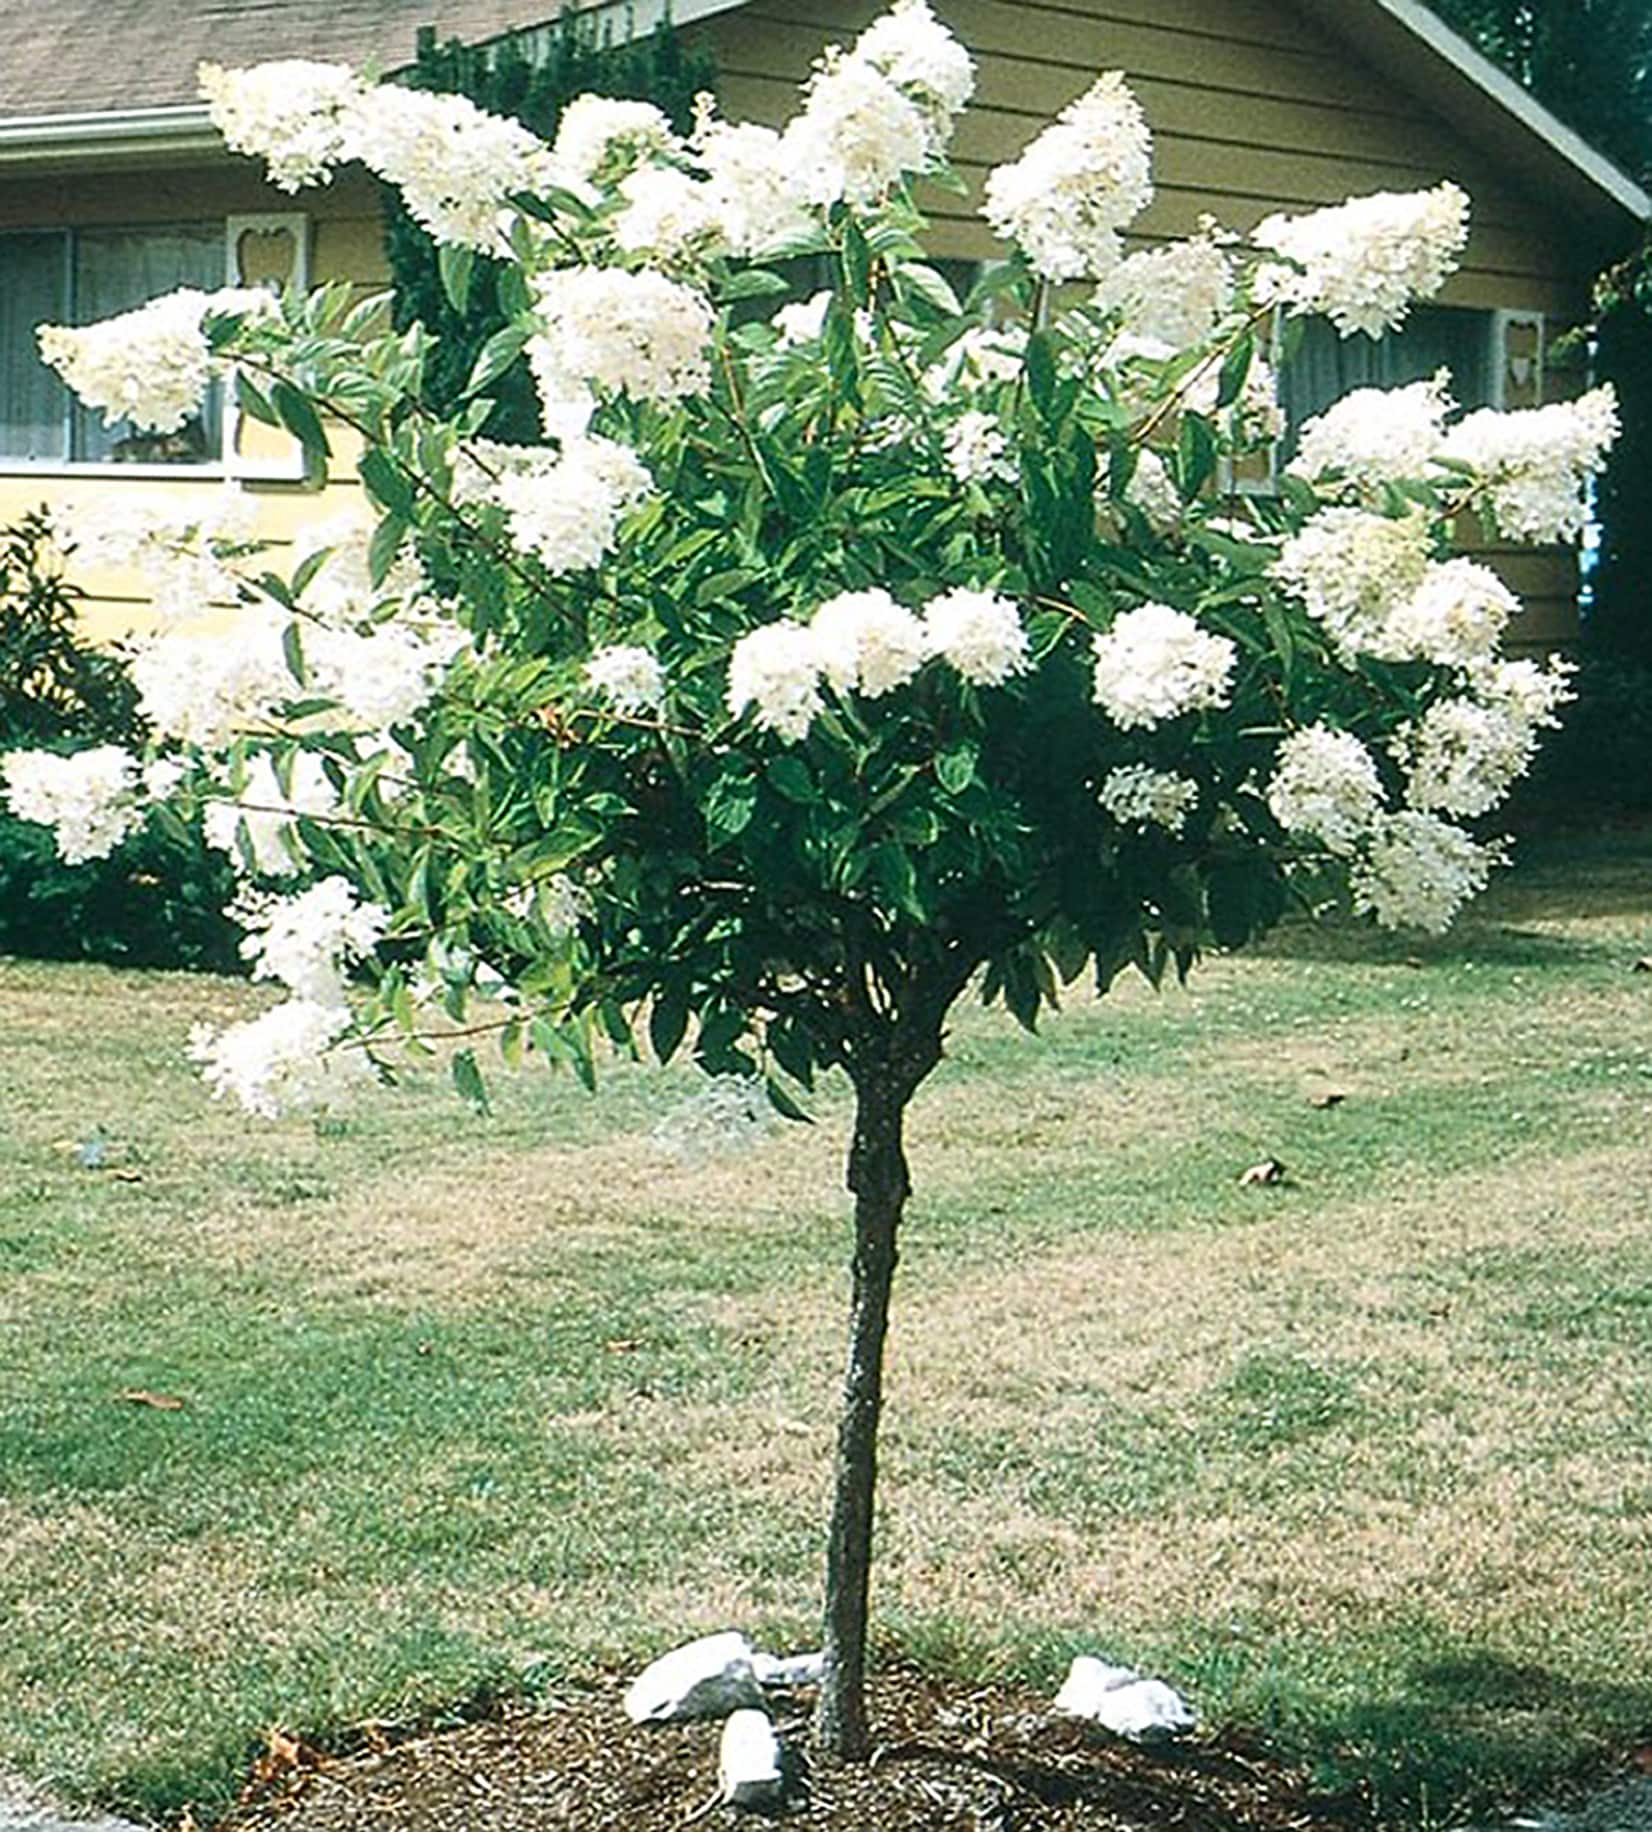 Image of Pee Gee hydrangea tree